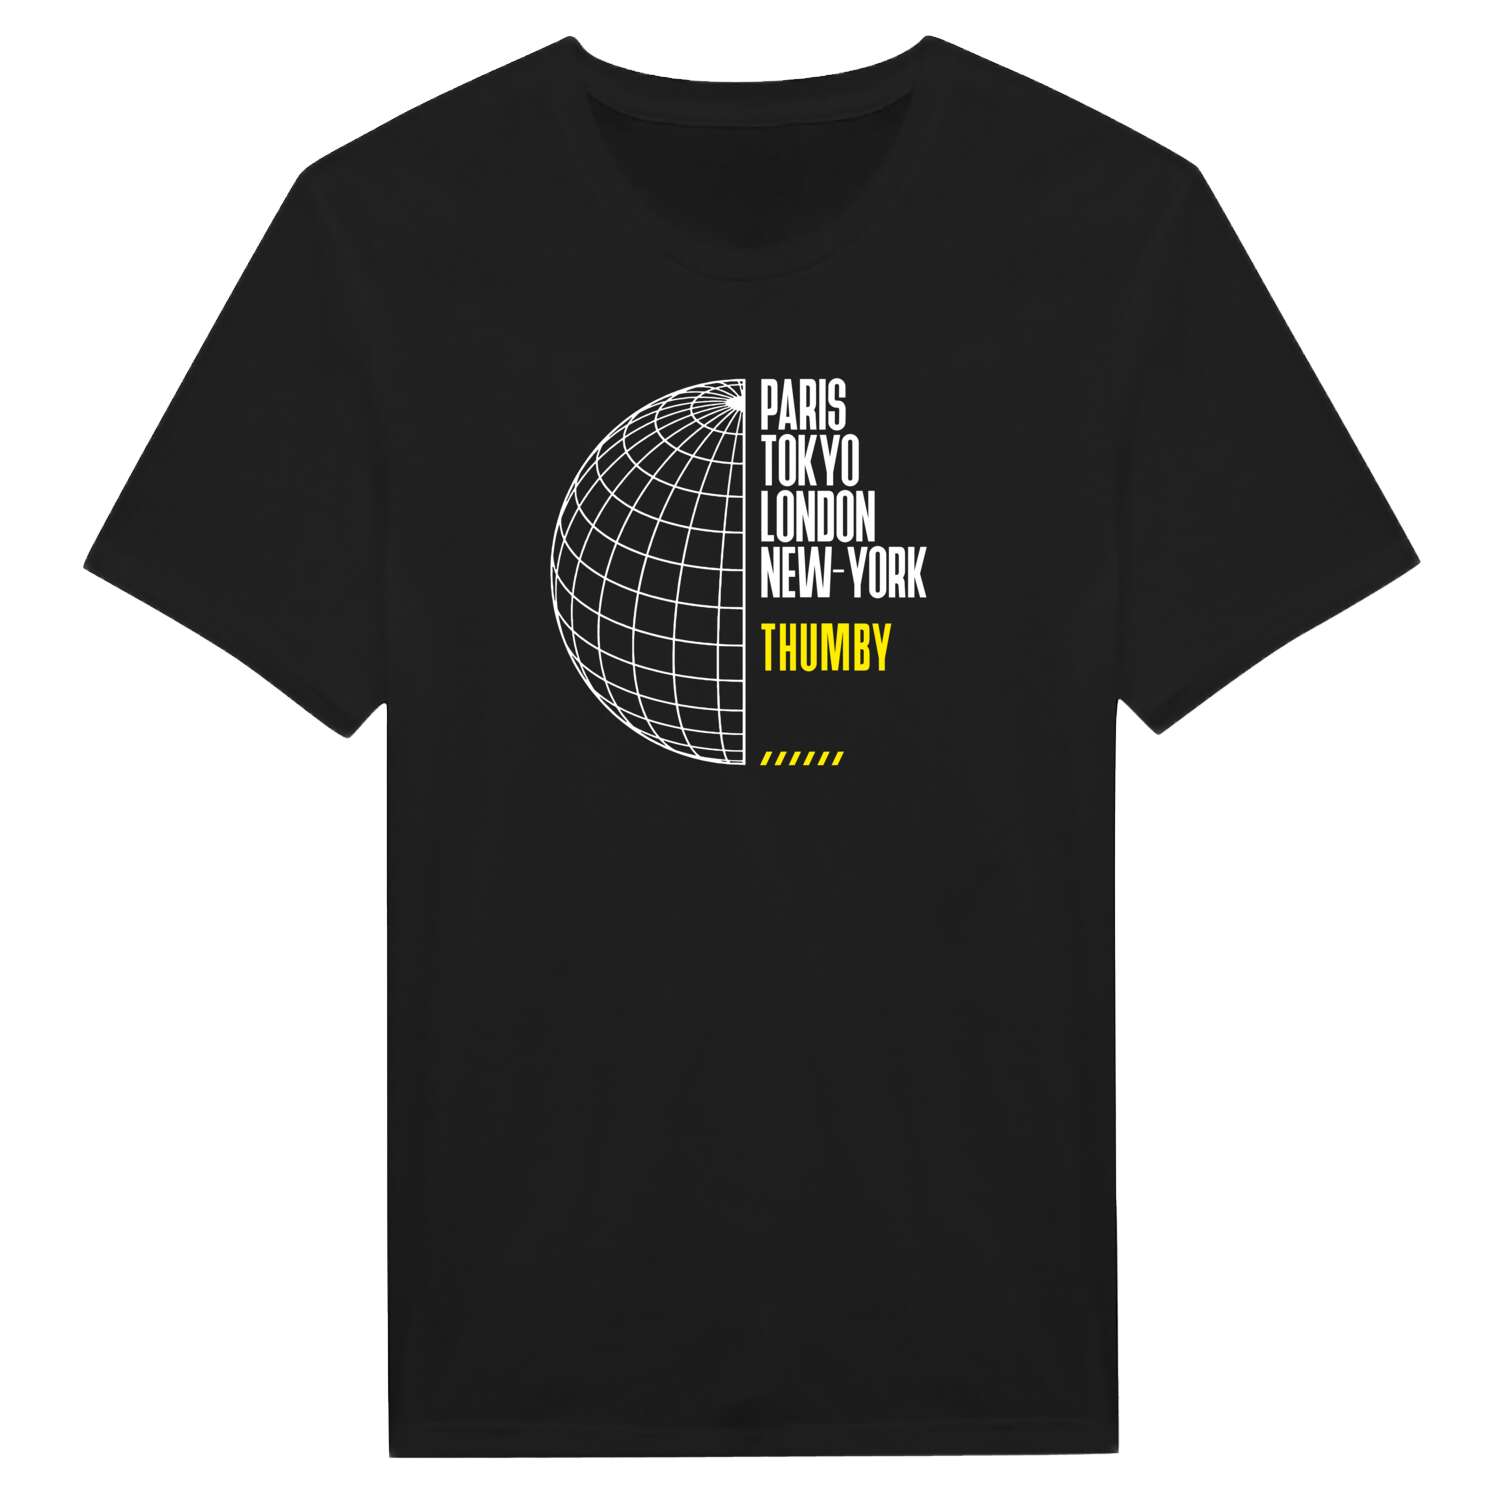 Thumby T-Shirt »Paris Tokyo London«